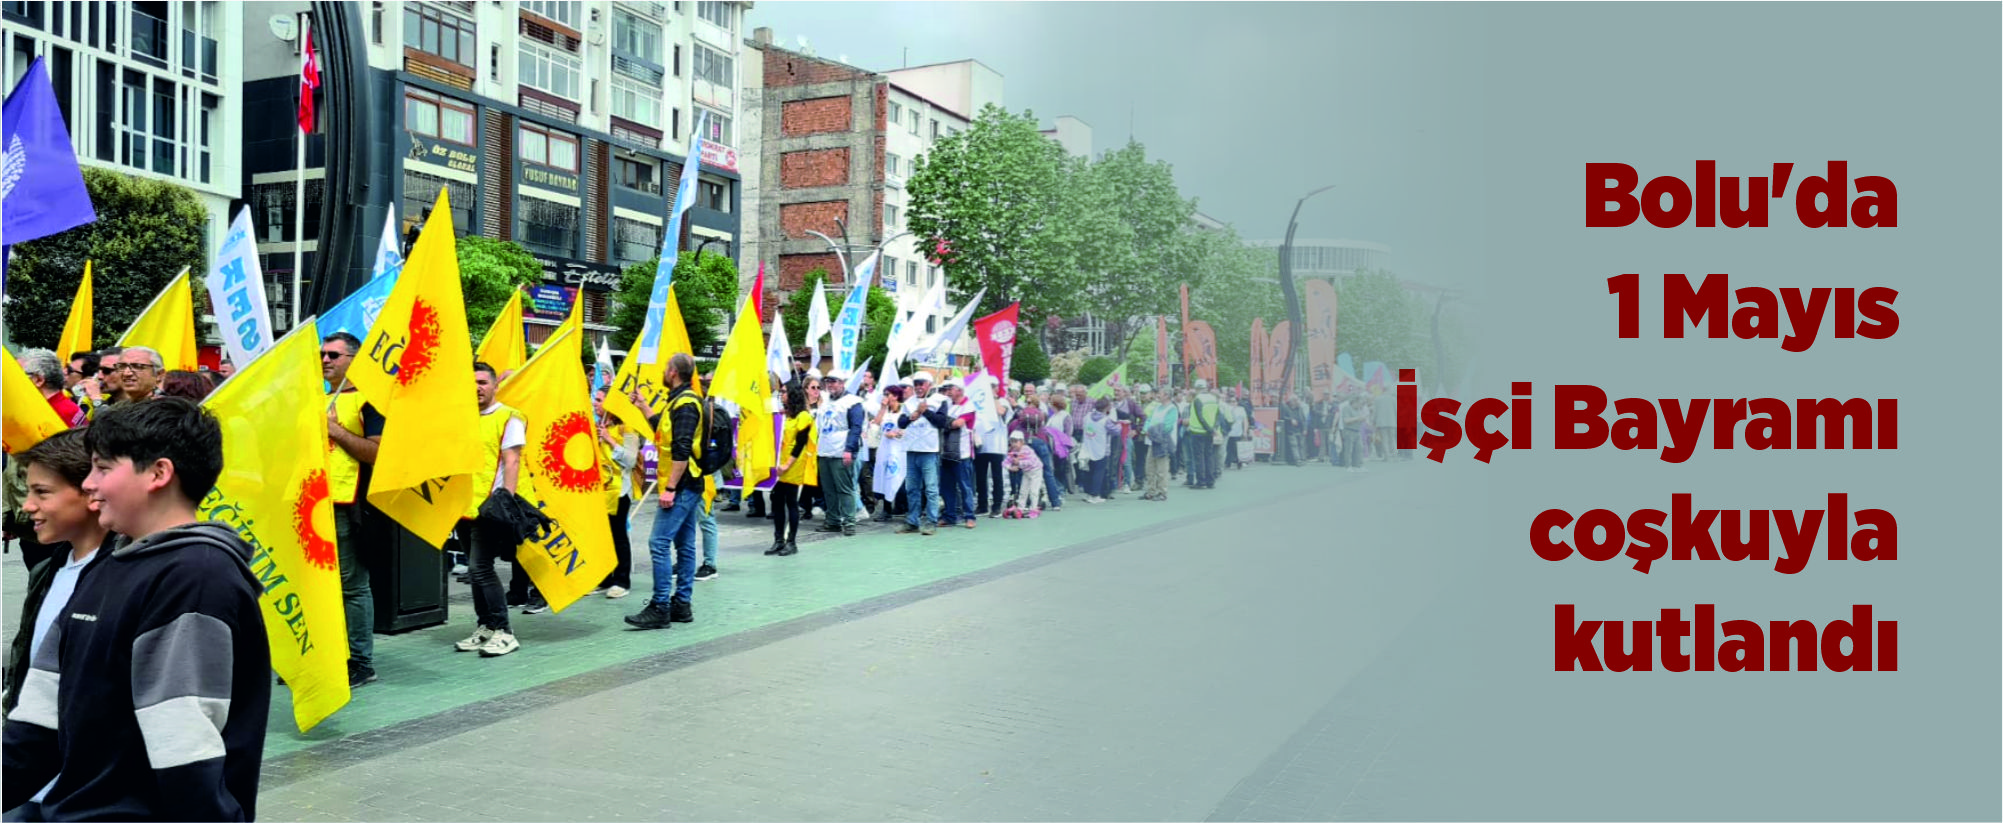 Bolu'da 1 Mayıs İşçi Bayramı coşkuyla kutlandı